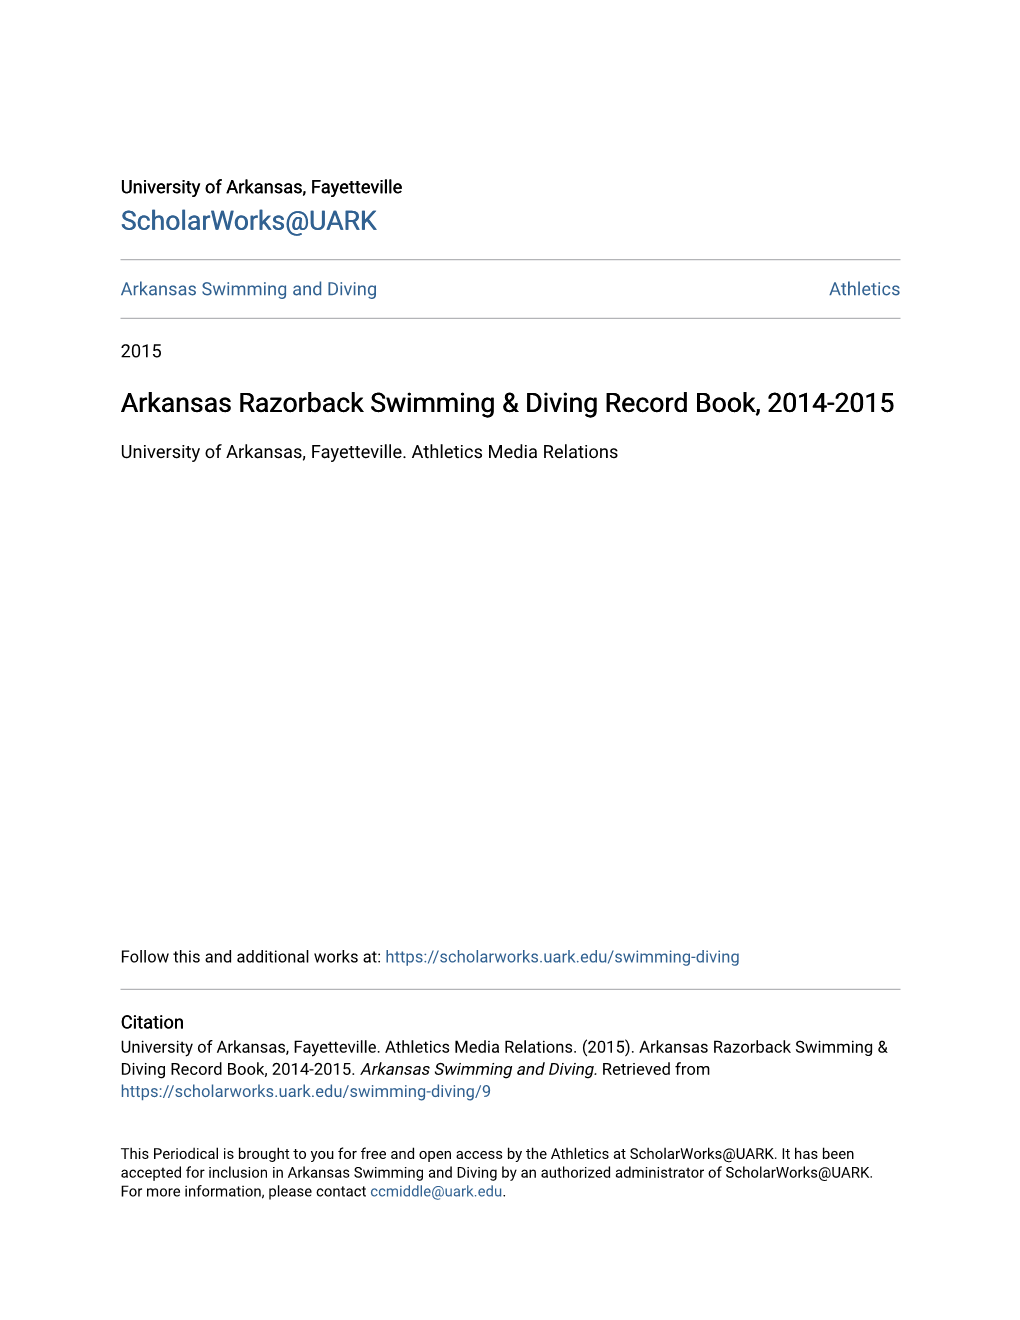 Arkansas Razorback Swimming & Diving Record Book, 2014-2015